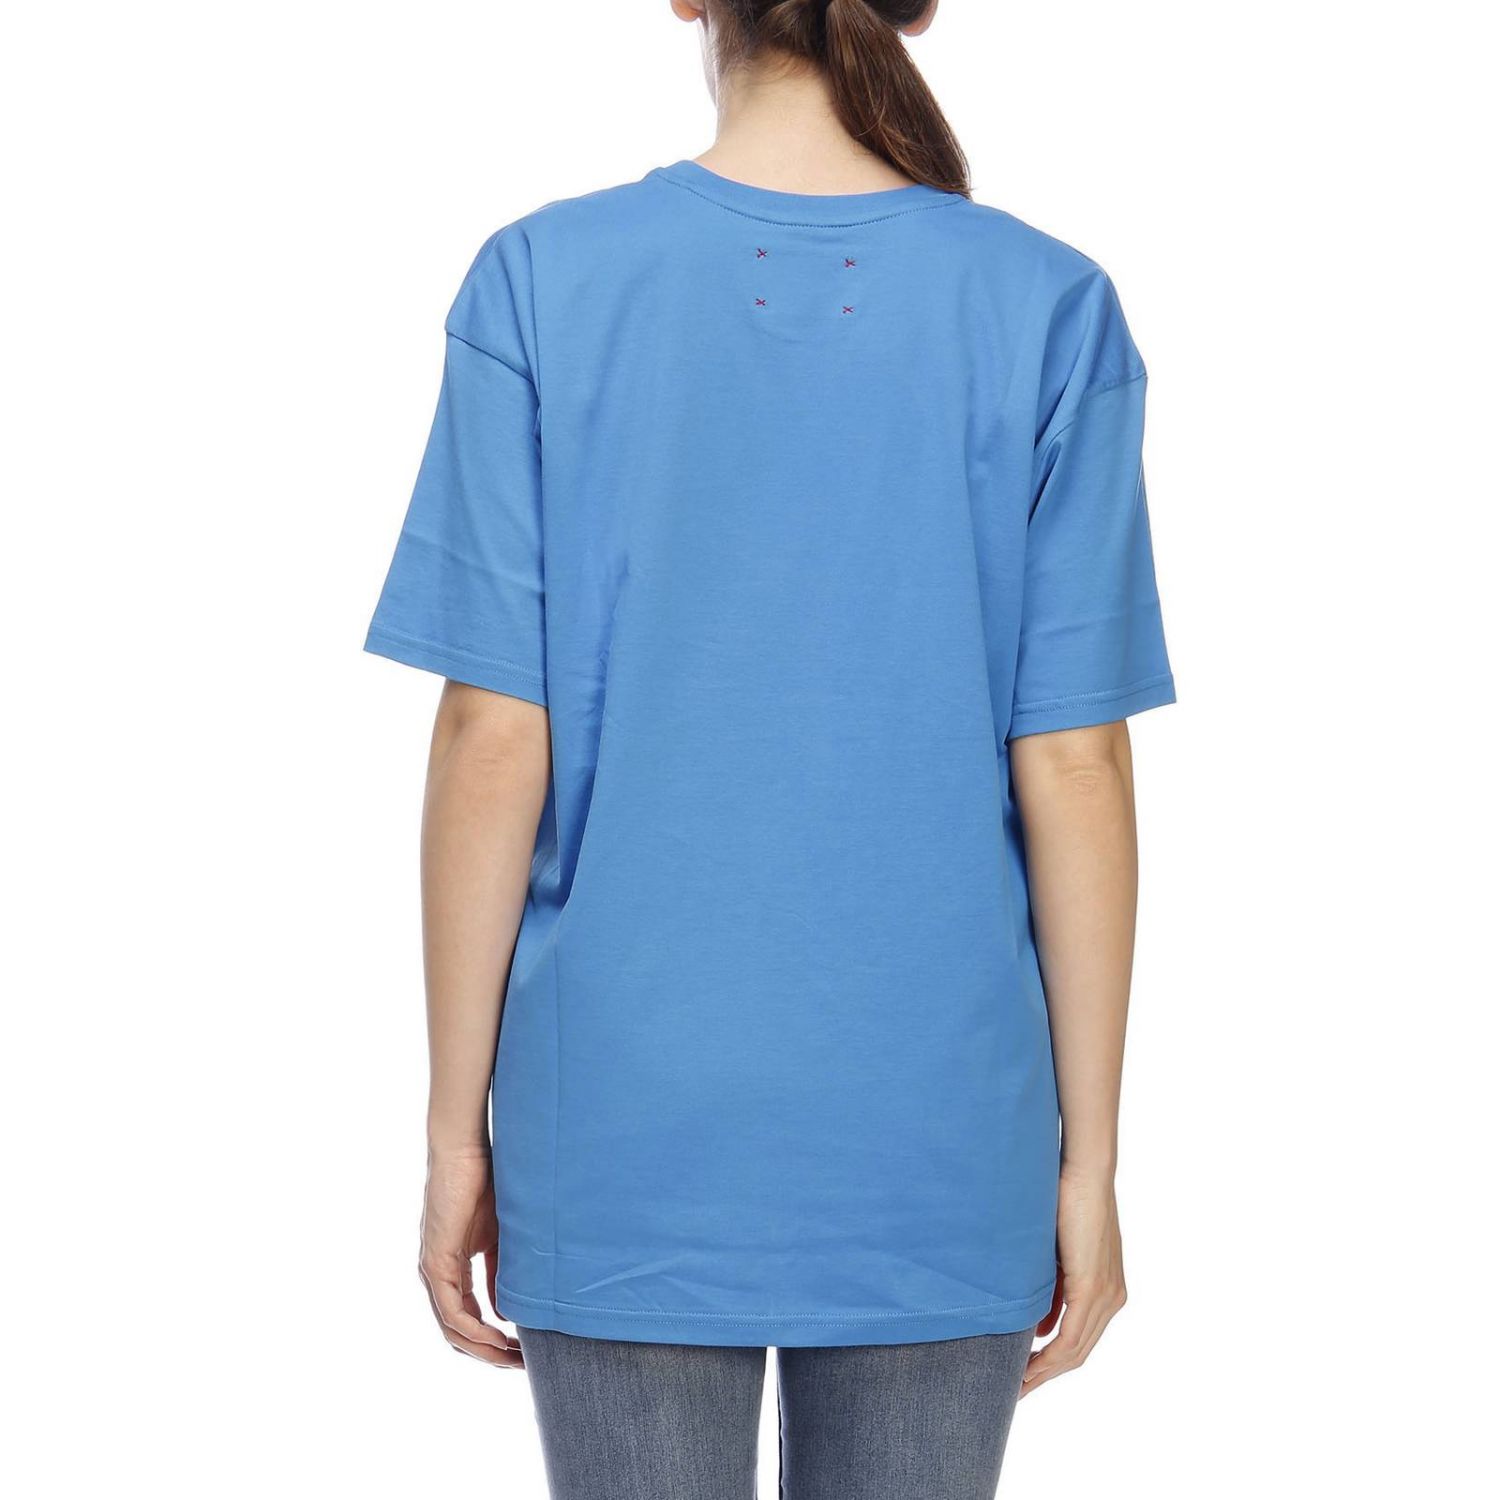 Alberta Ferretti Outlet: t-shirt for woman - Gnawed Blue | Alberta